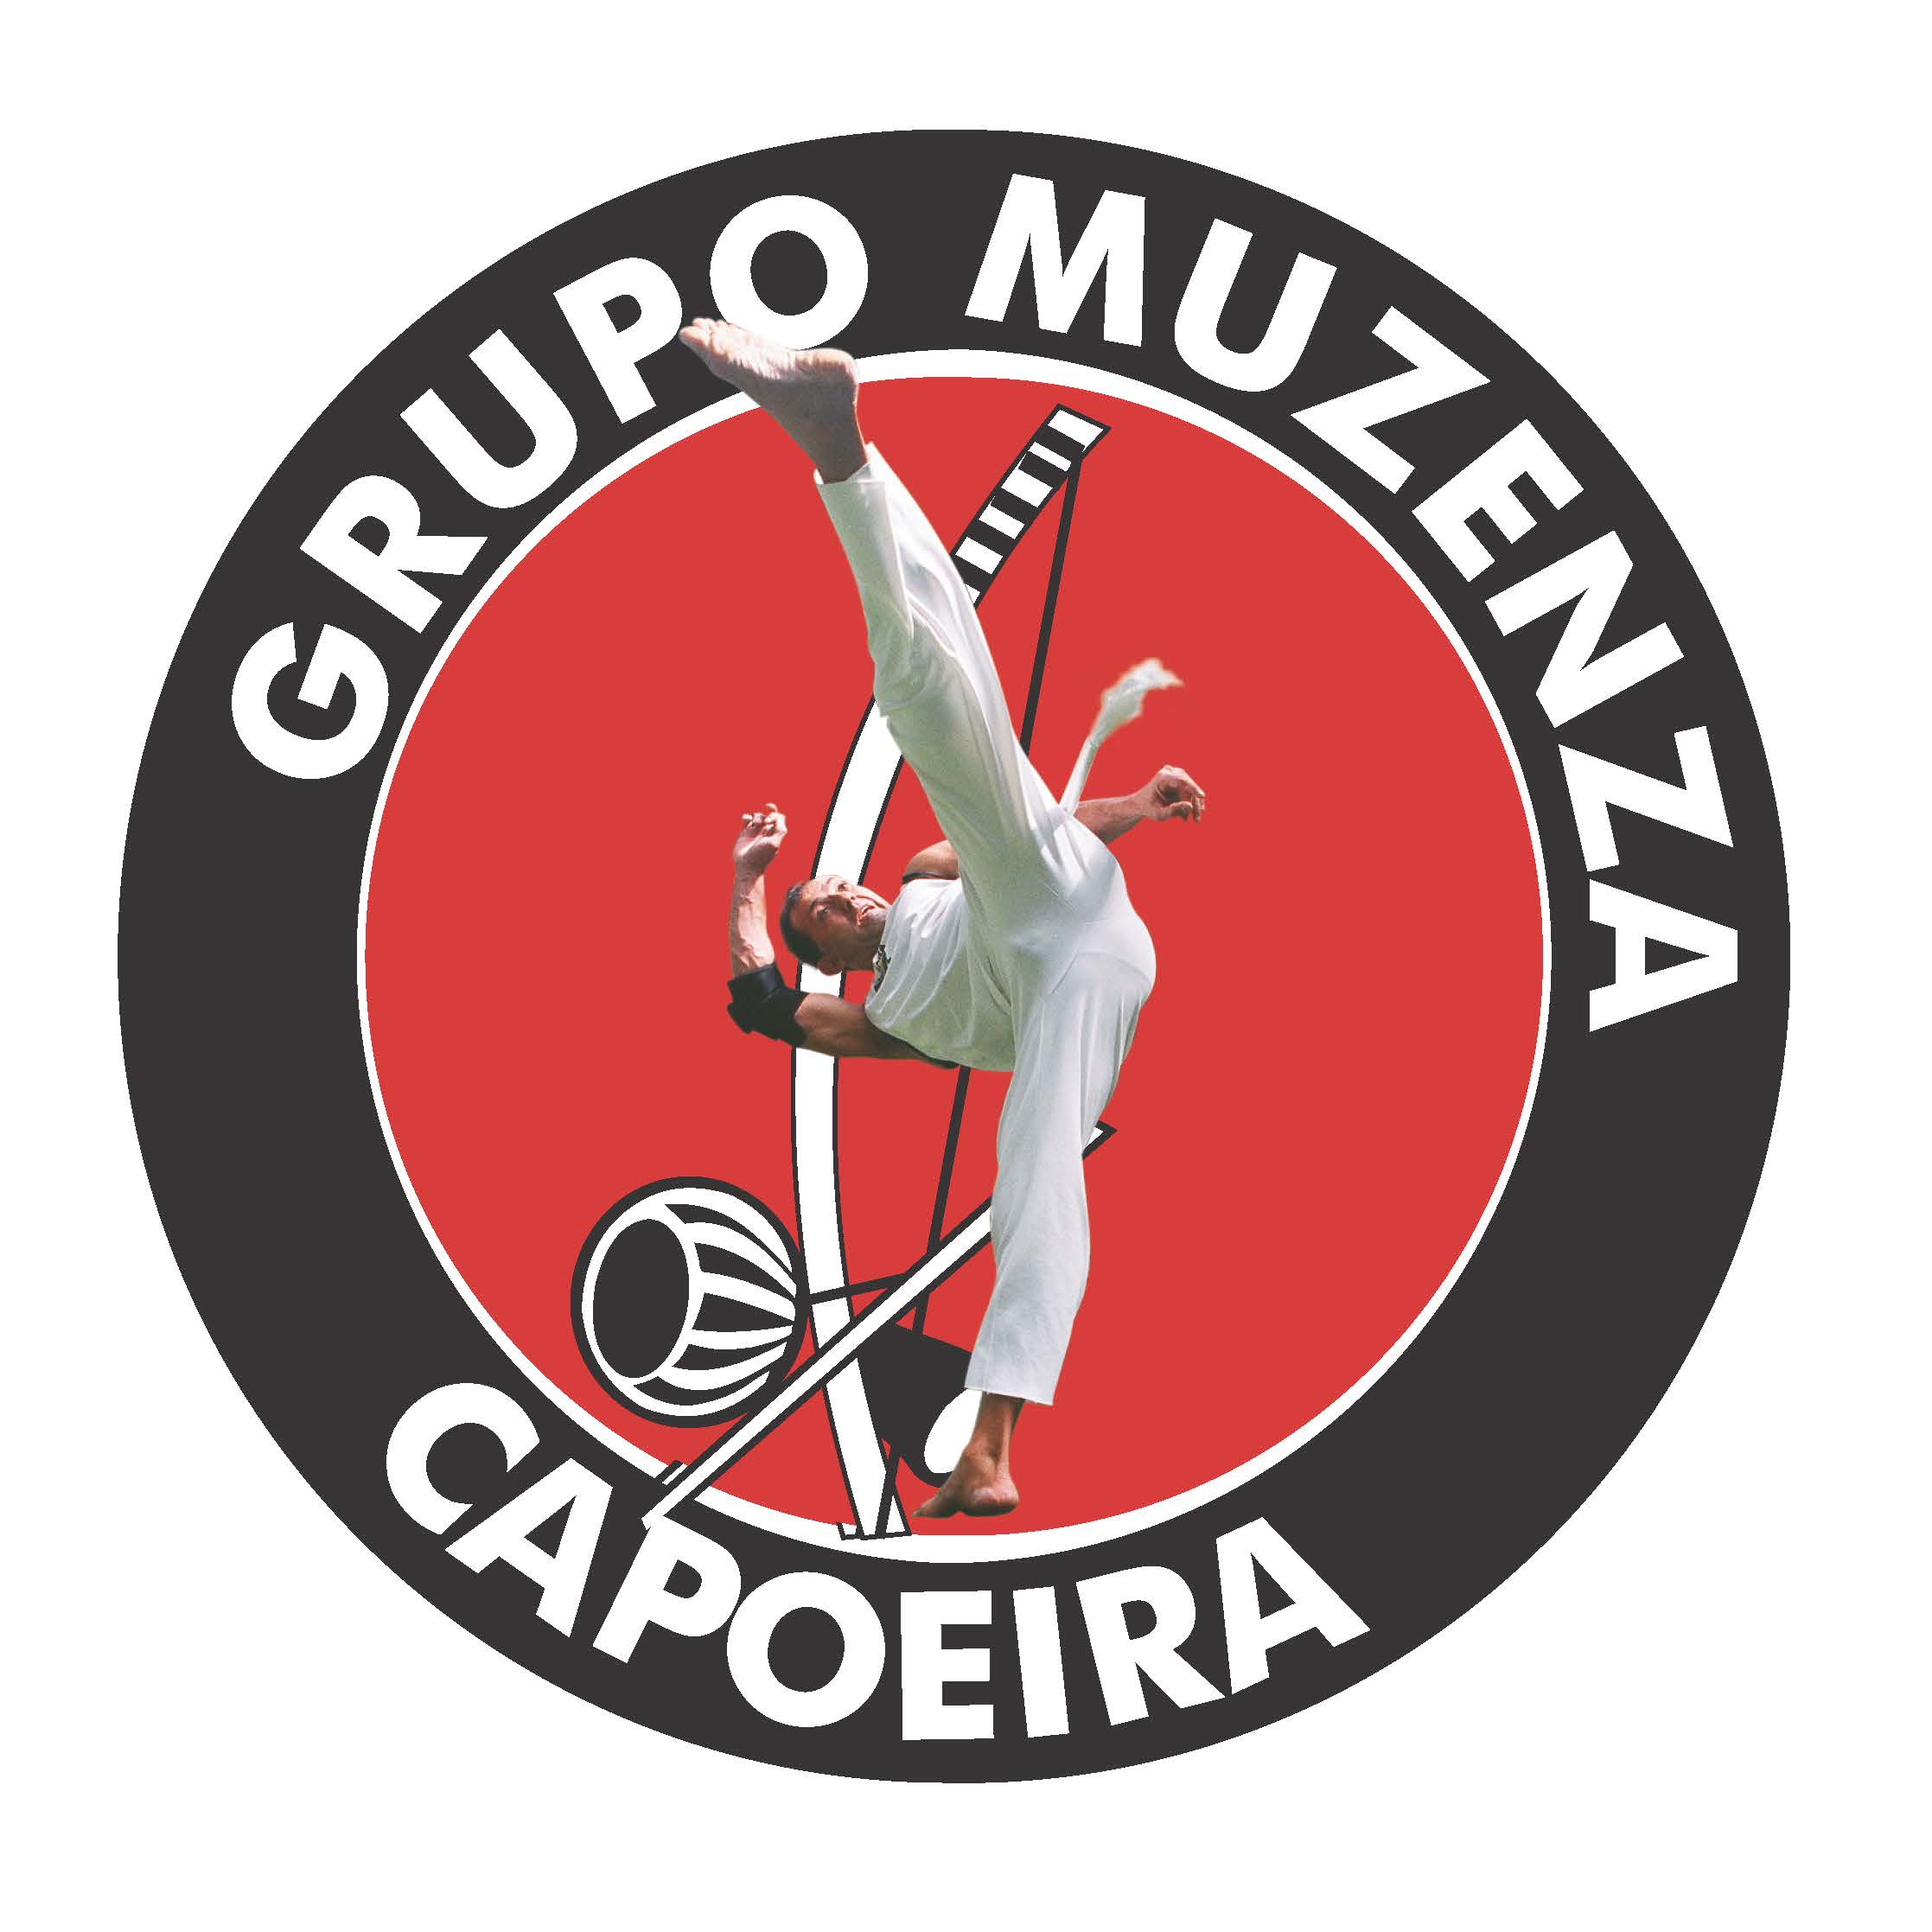 Grupo Muzenza de Capoeira - Capoeira America Europa Asia Mundial